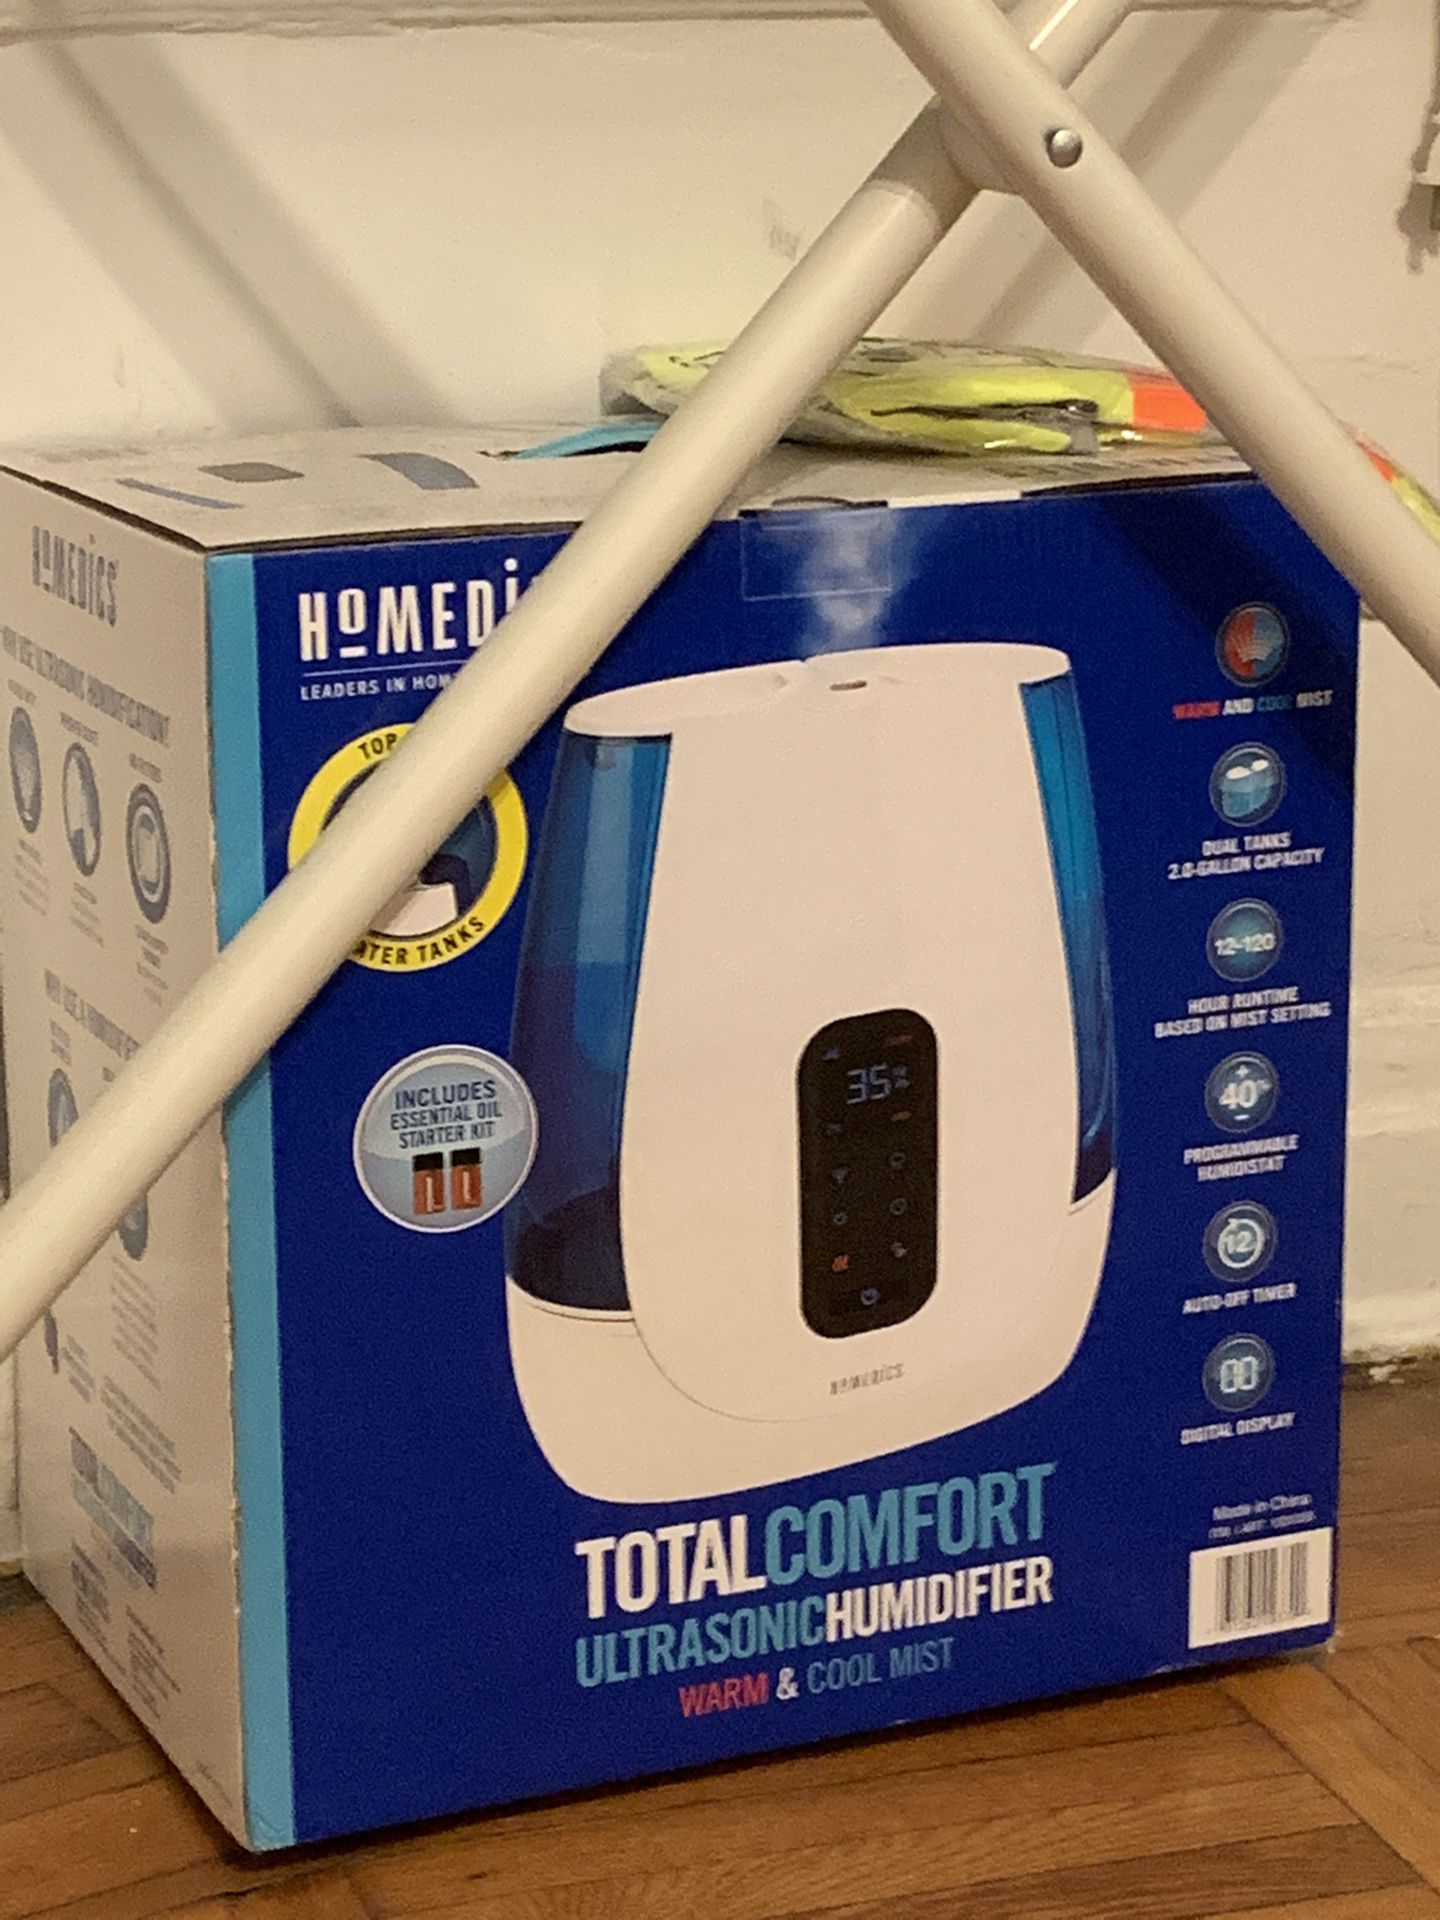 Total comfort ultrasonic humidifier